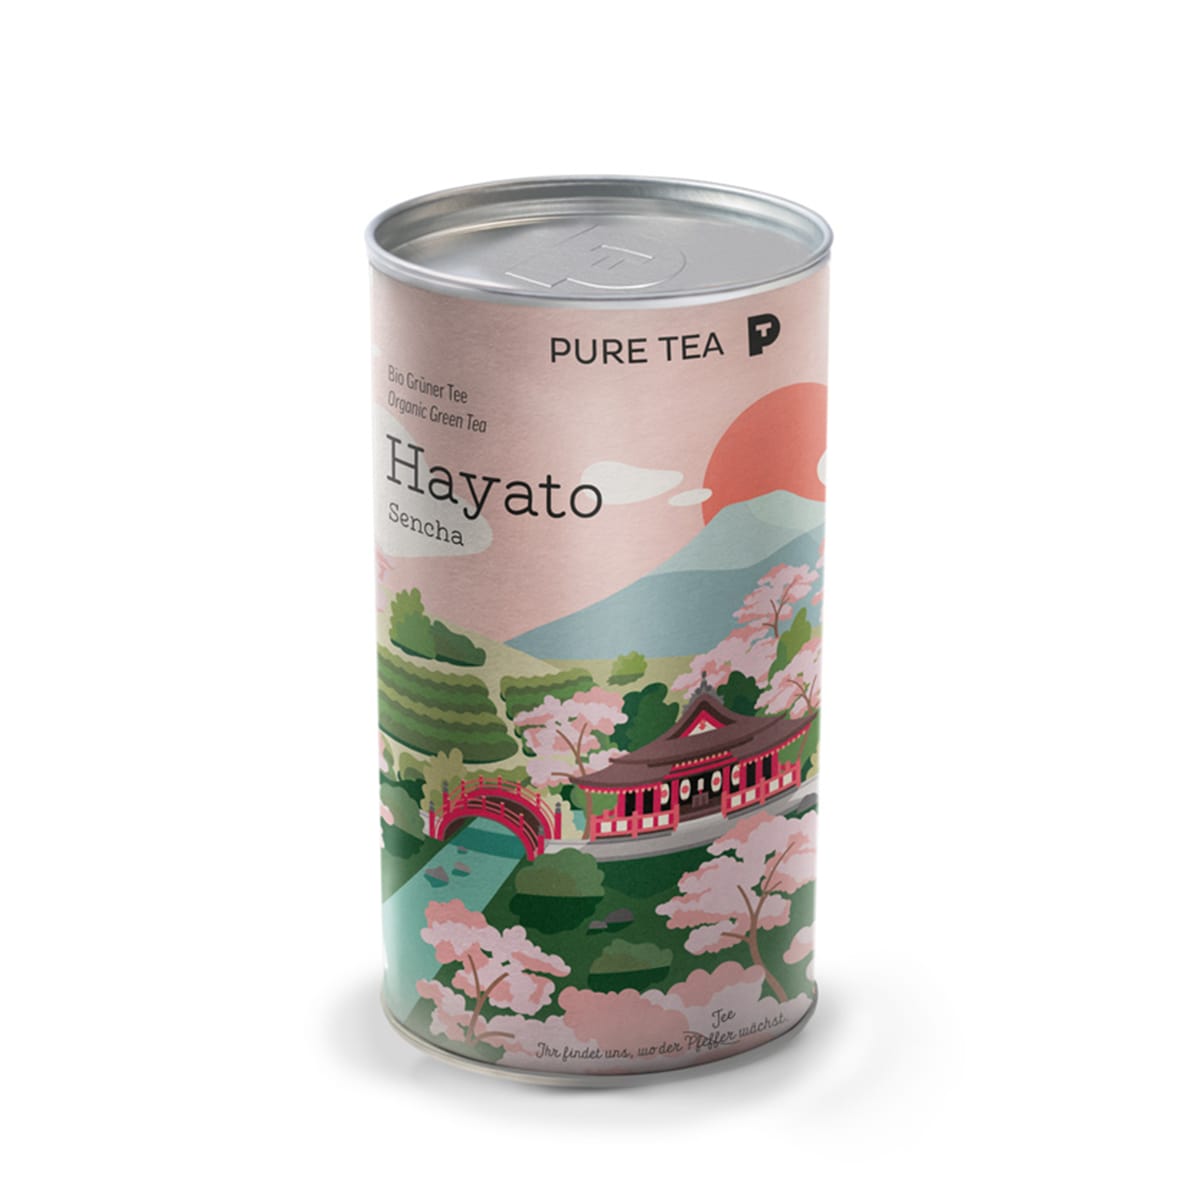 Hayato Sencha - loser Bio Tee von Pure Tea